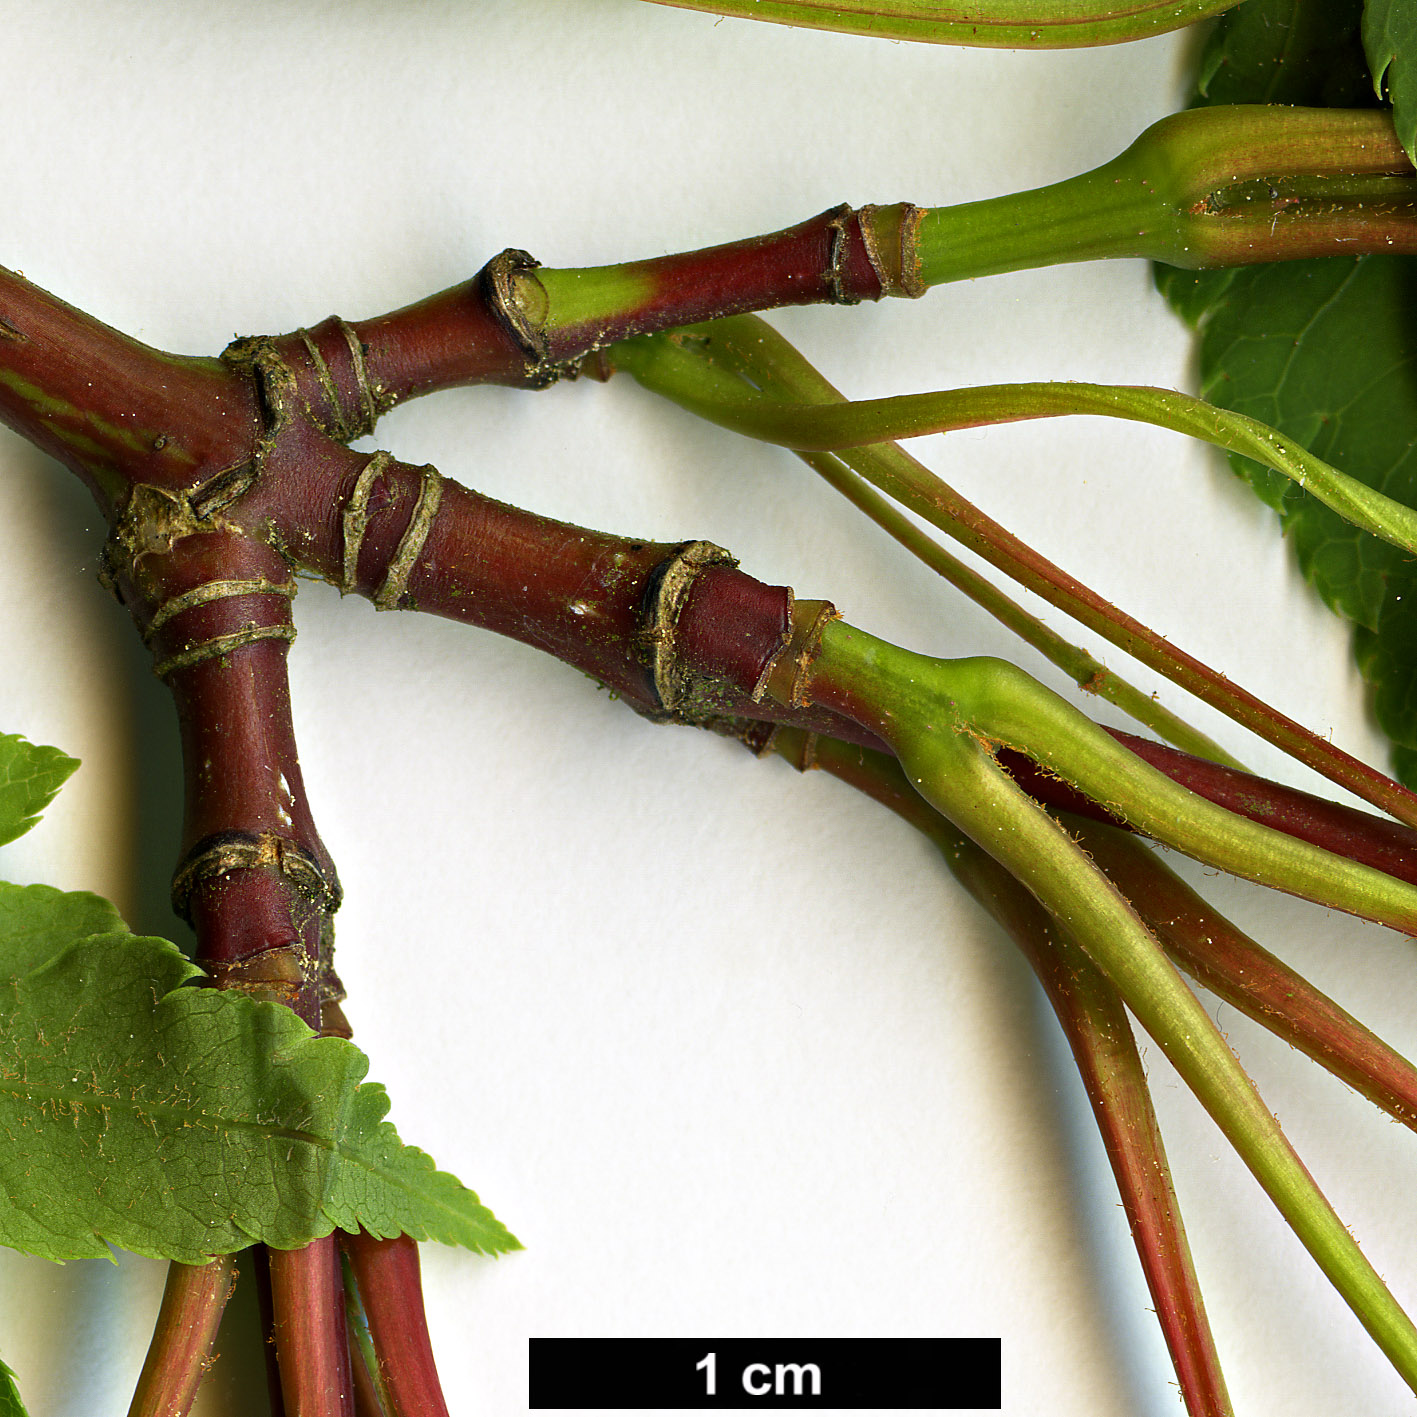 High resolution image: Family: Sapindaceae - Genus: Acer - Taxon: tschonoskii - SpeciesSub: var. australe